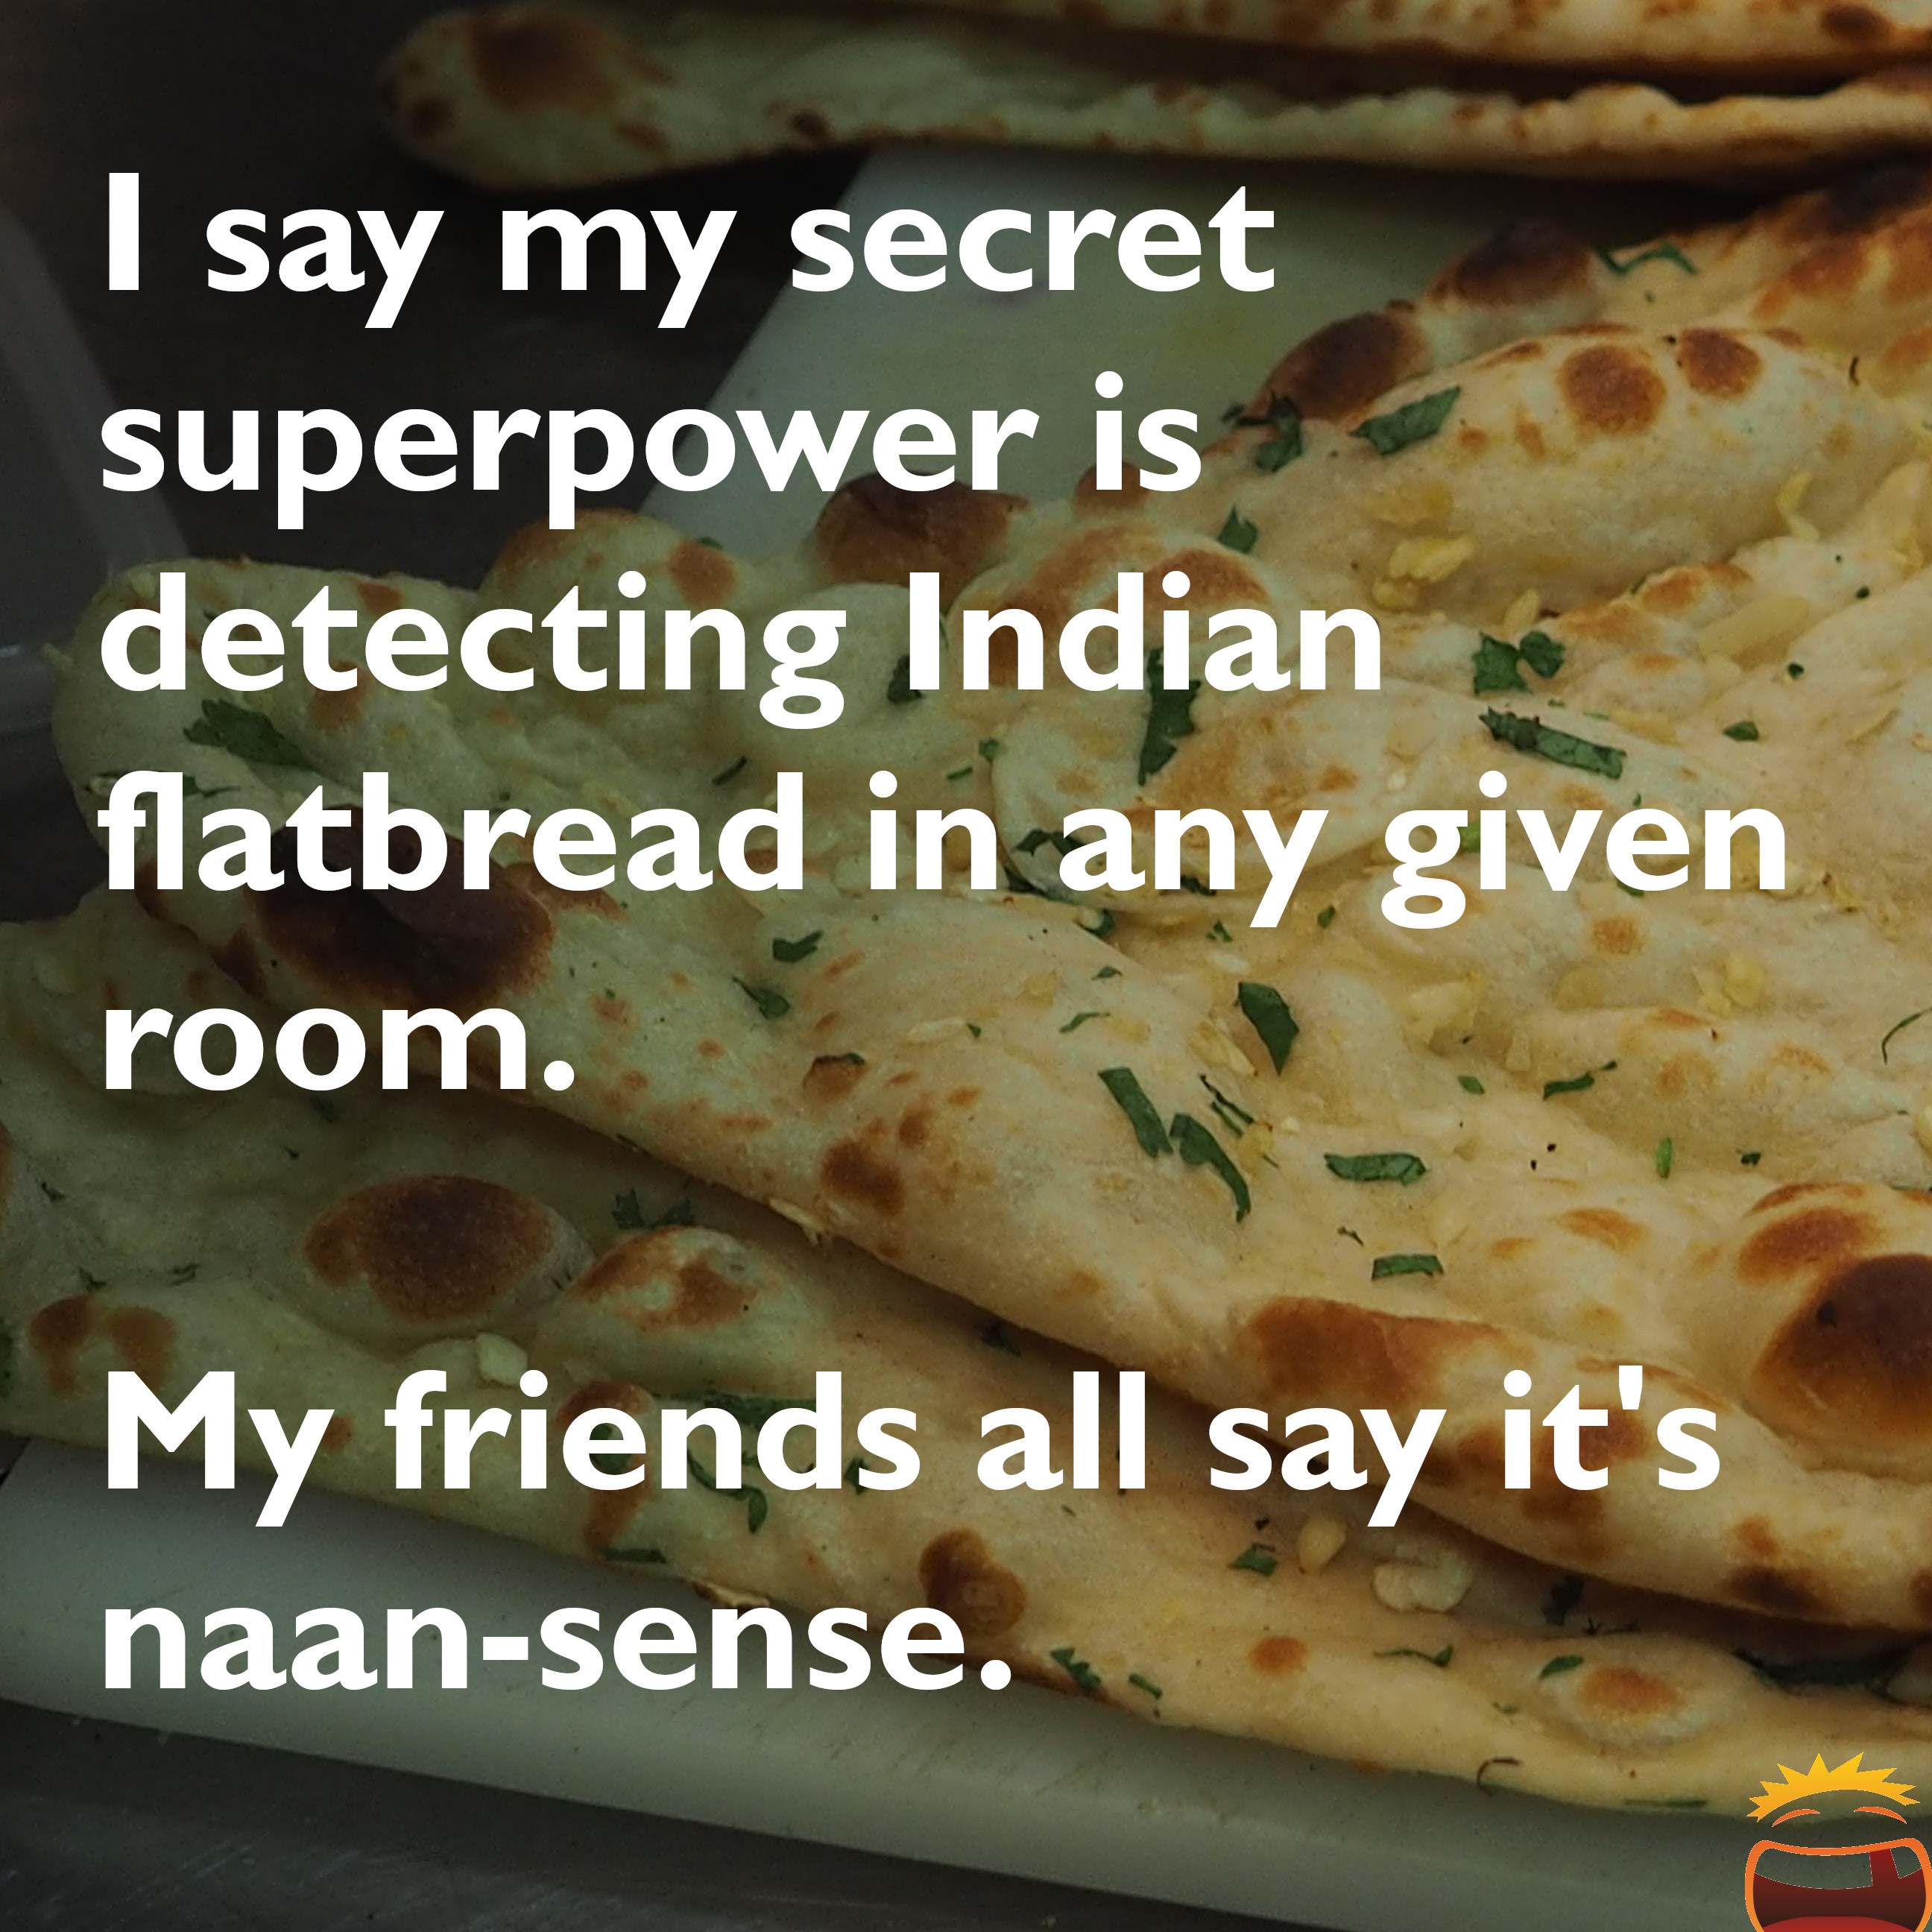 Detecting Indian flatbread